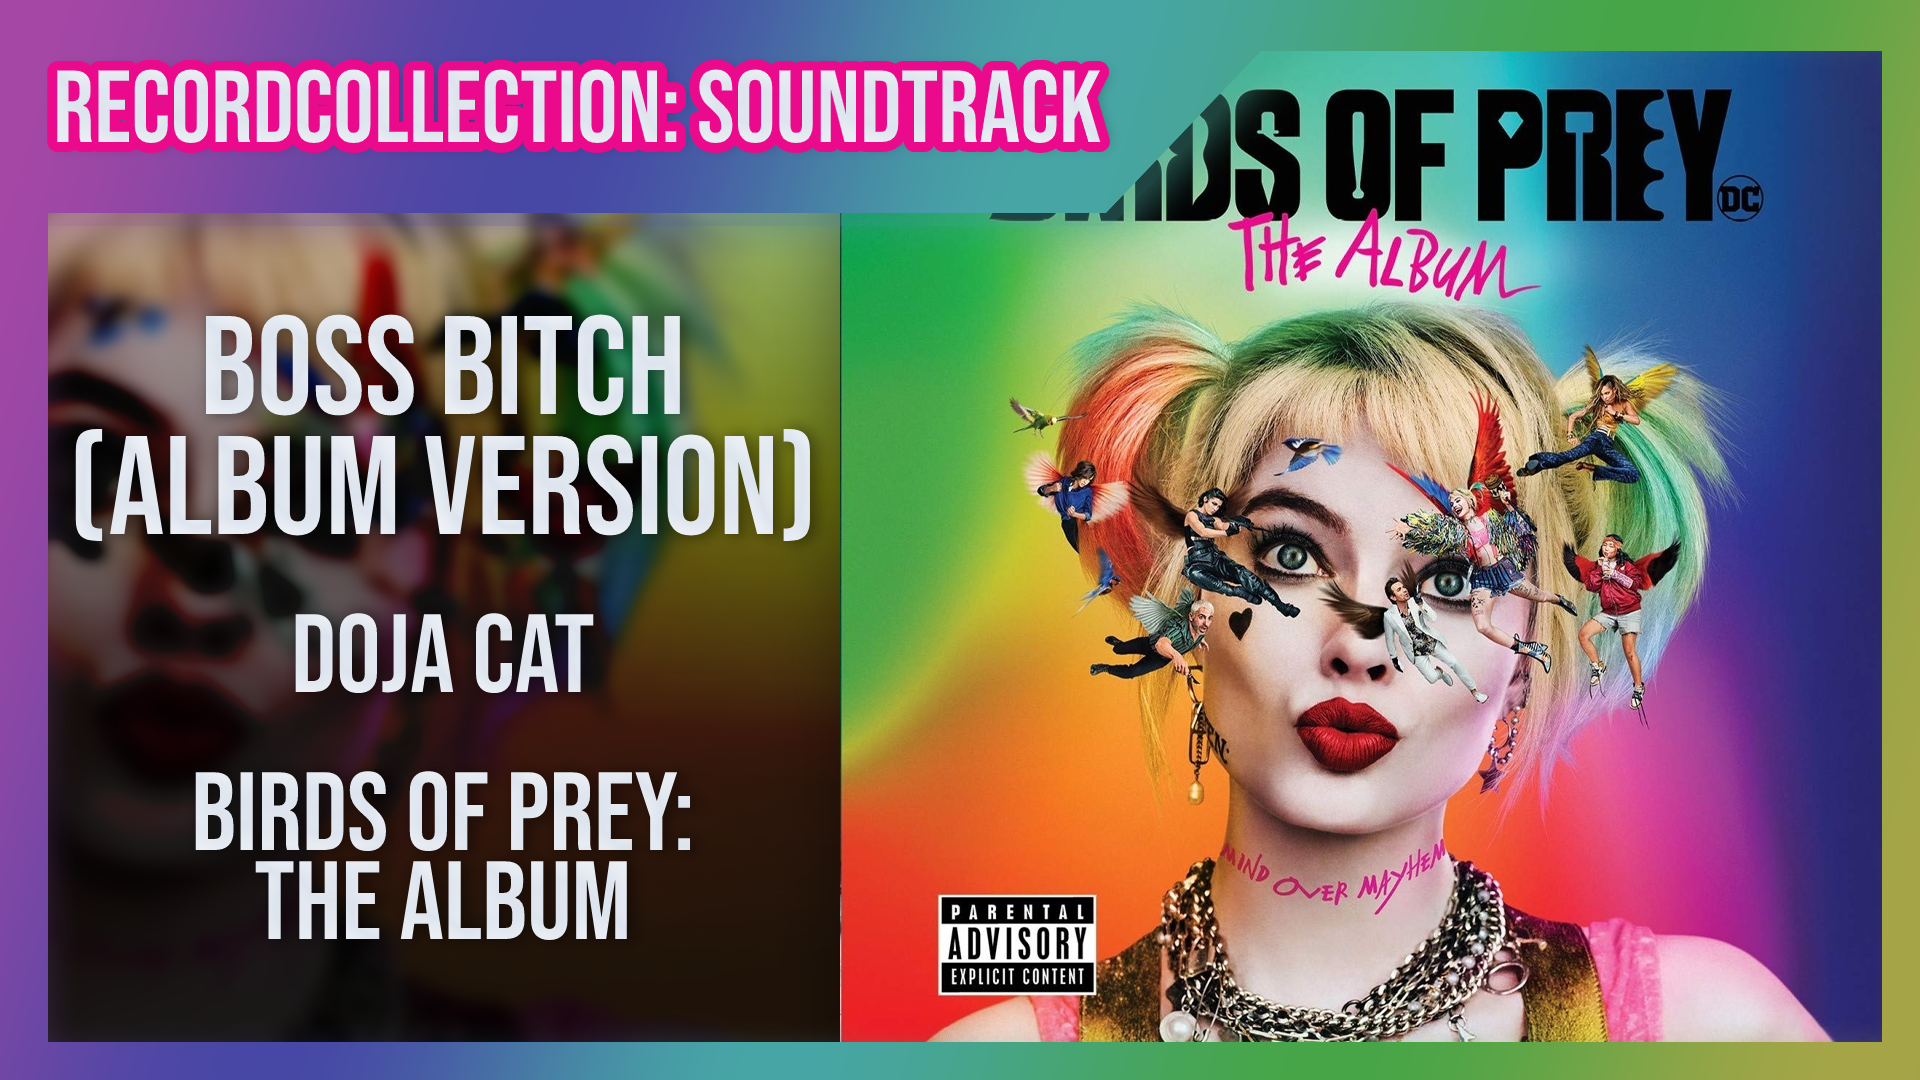 Doja Cat 'Birds of Prey' Soundtrack Song: Listen